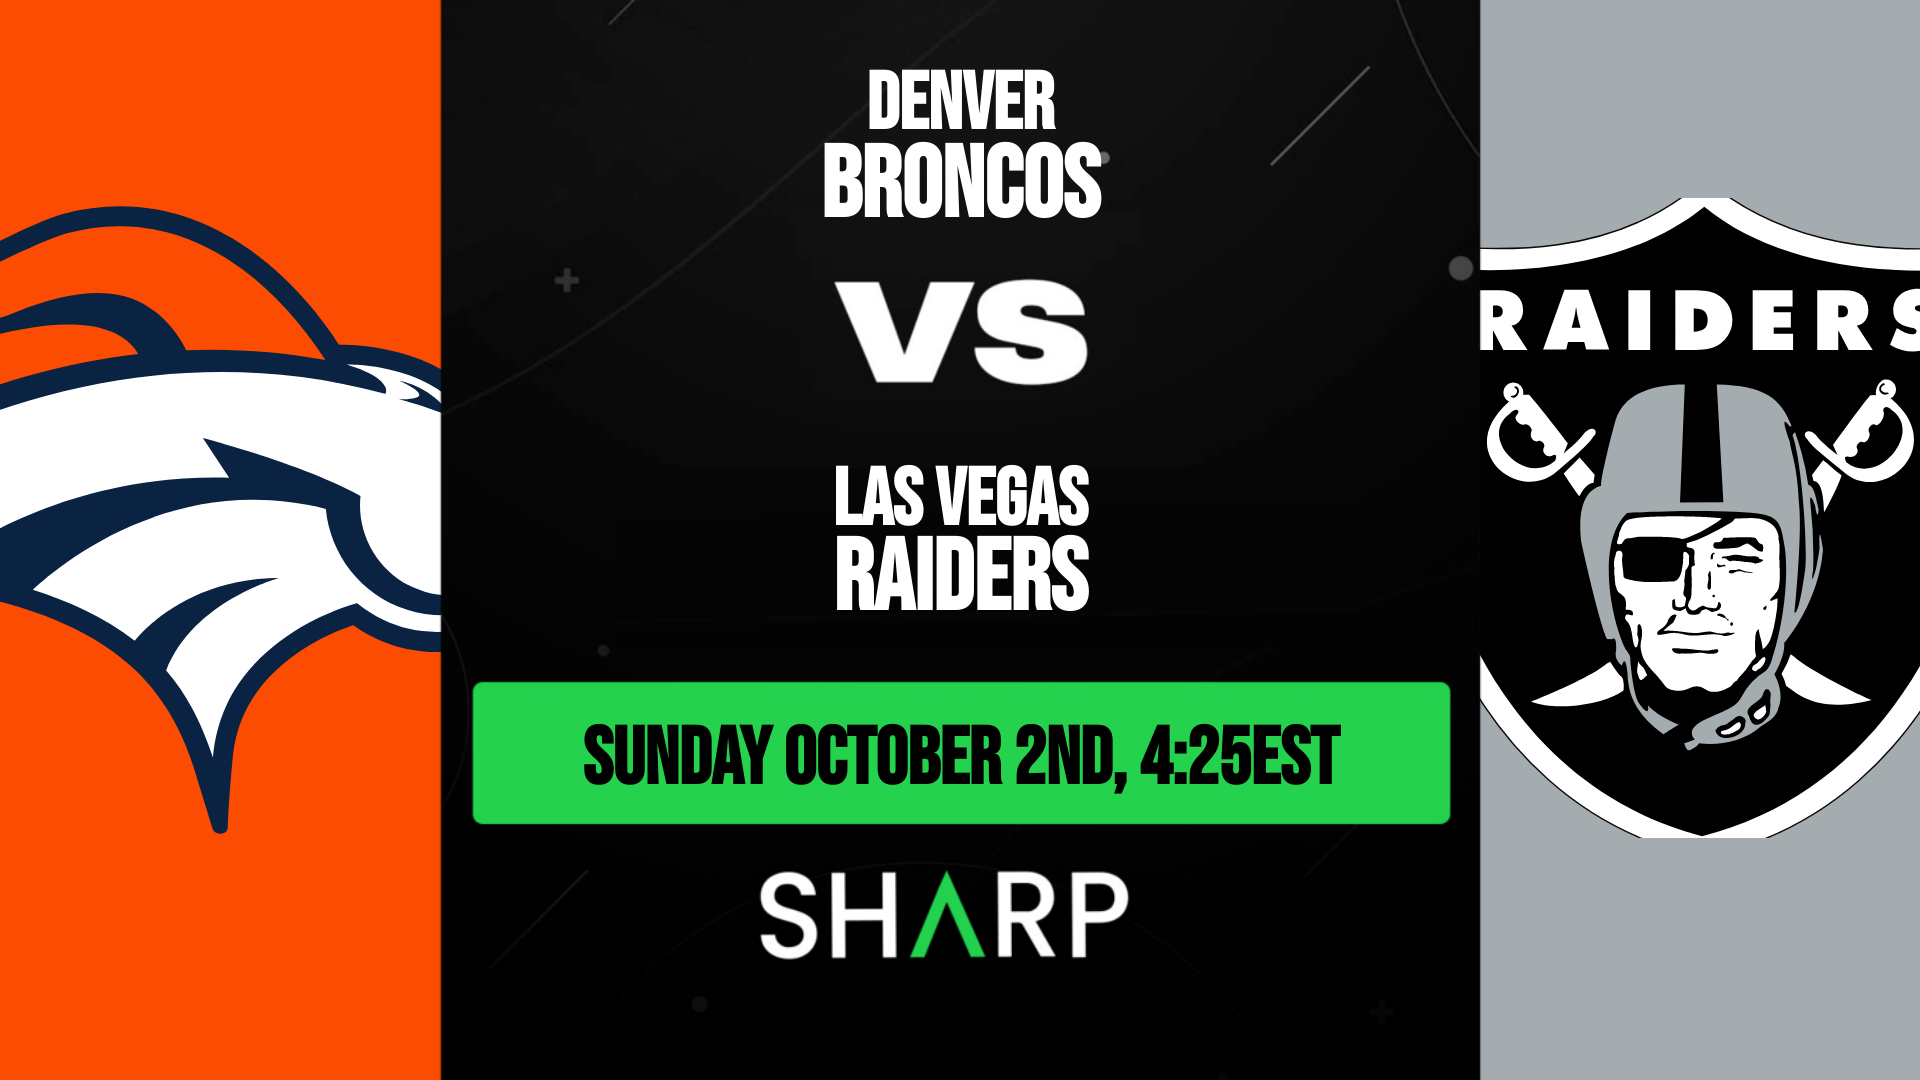 Denver Broncos vs Las Vegas Raiders Matchup Preview - October 2nd